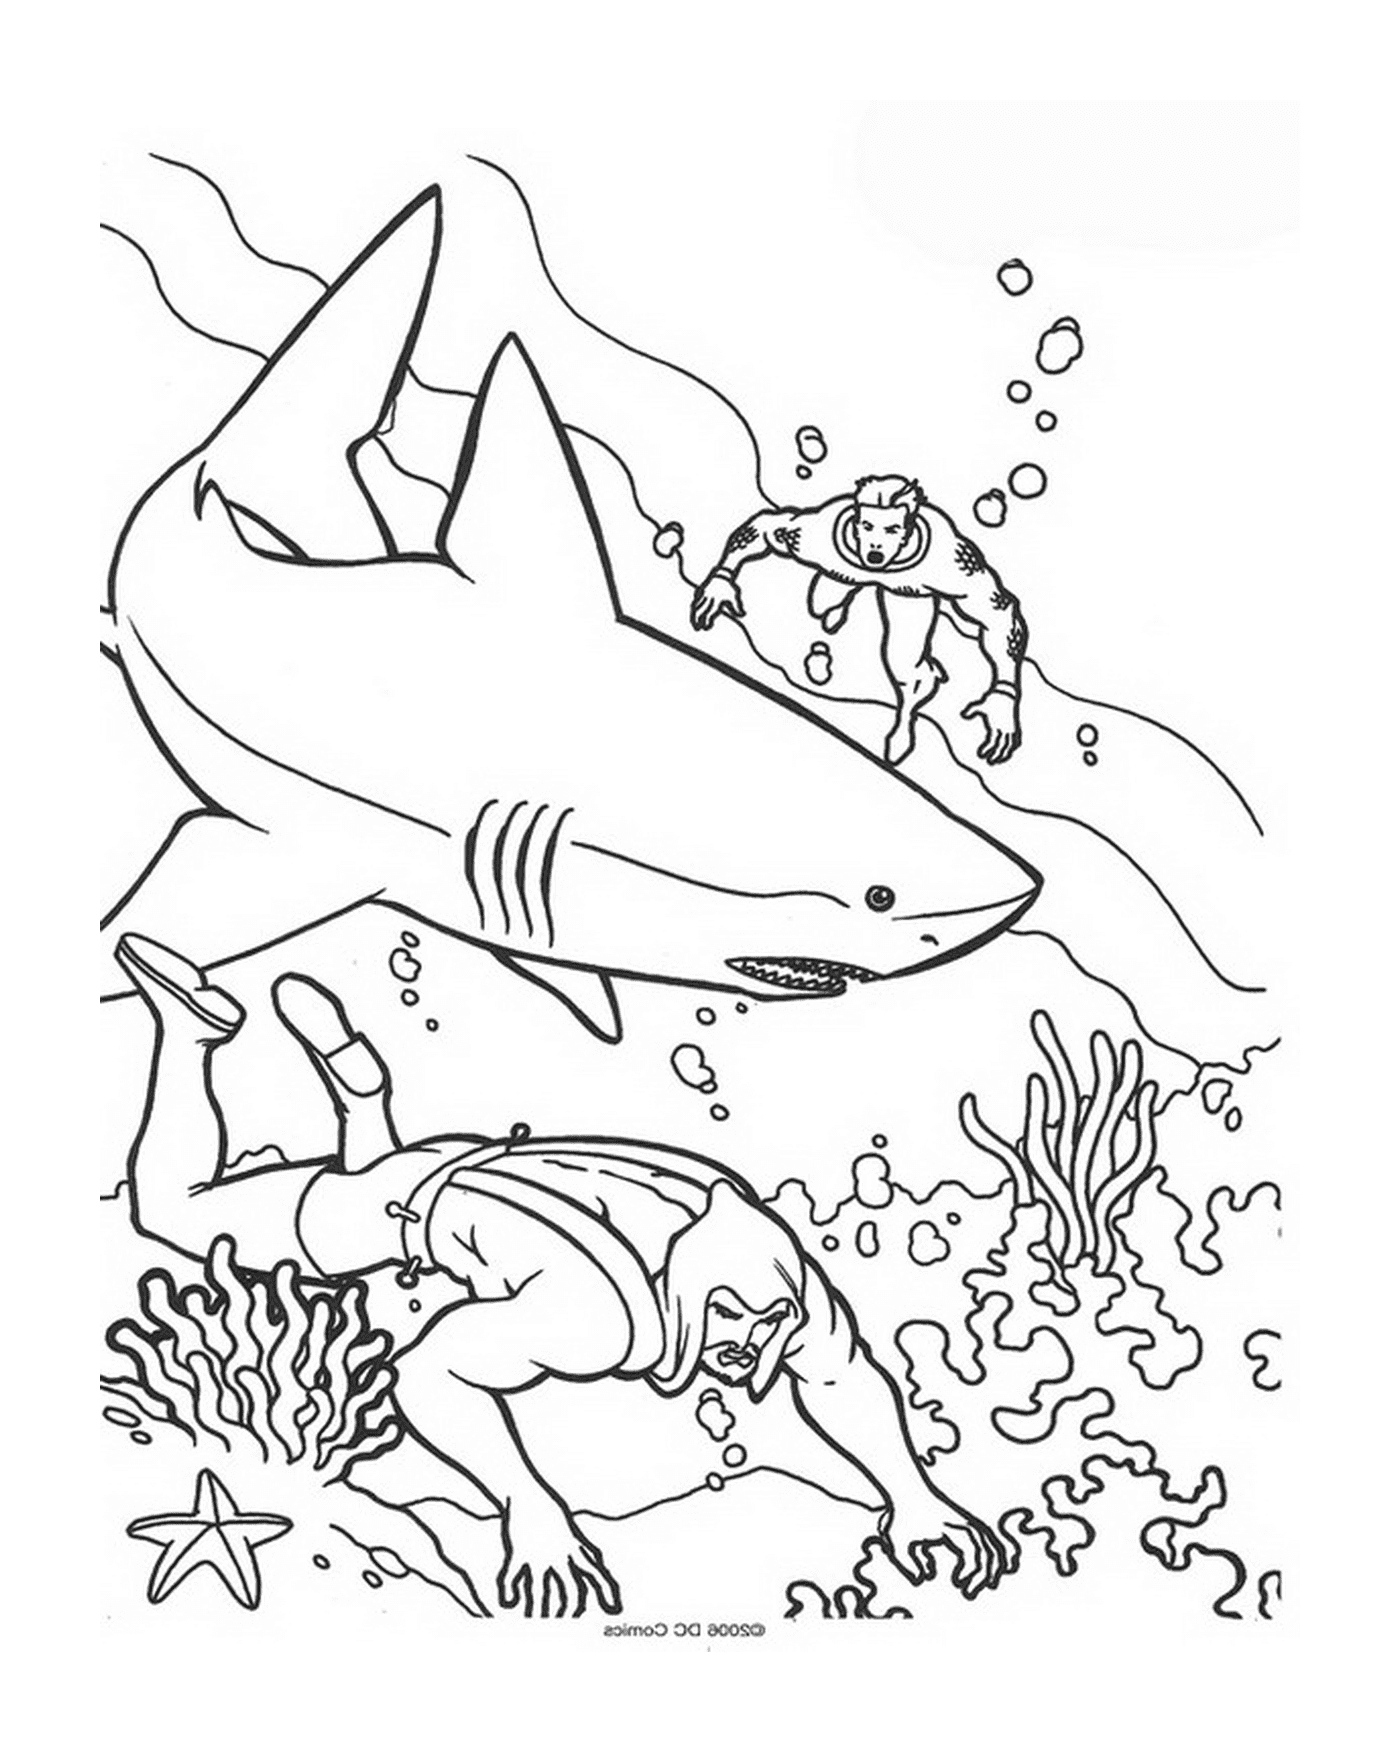  Aquaman with sharks 